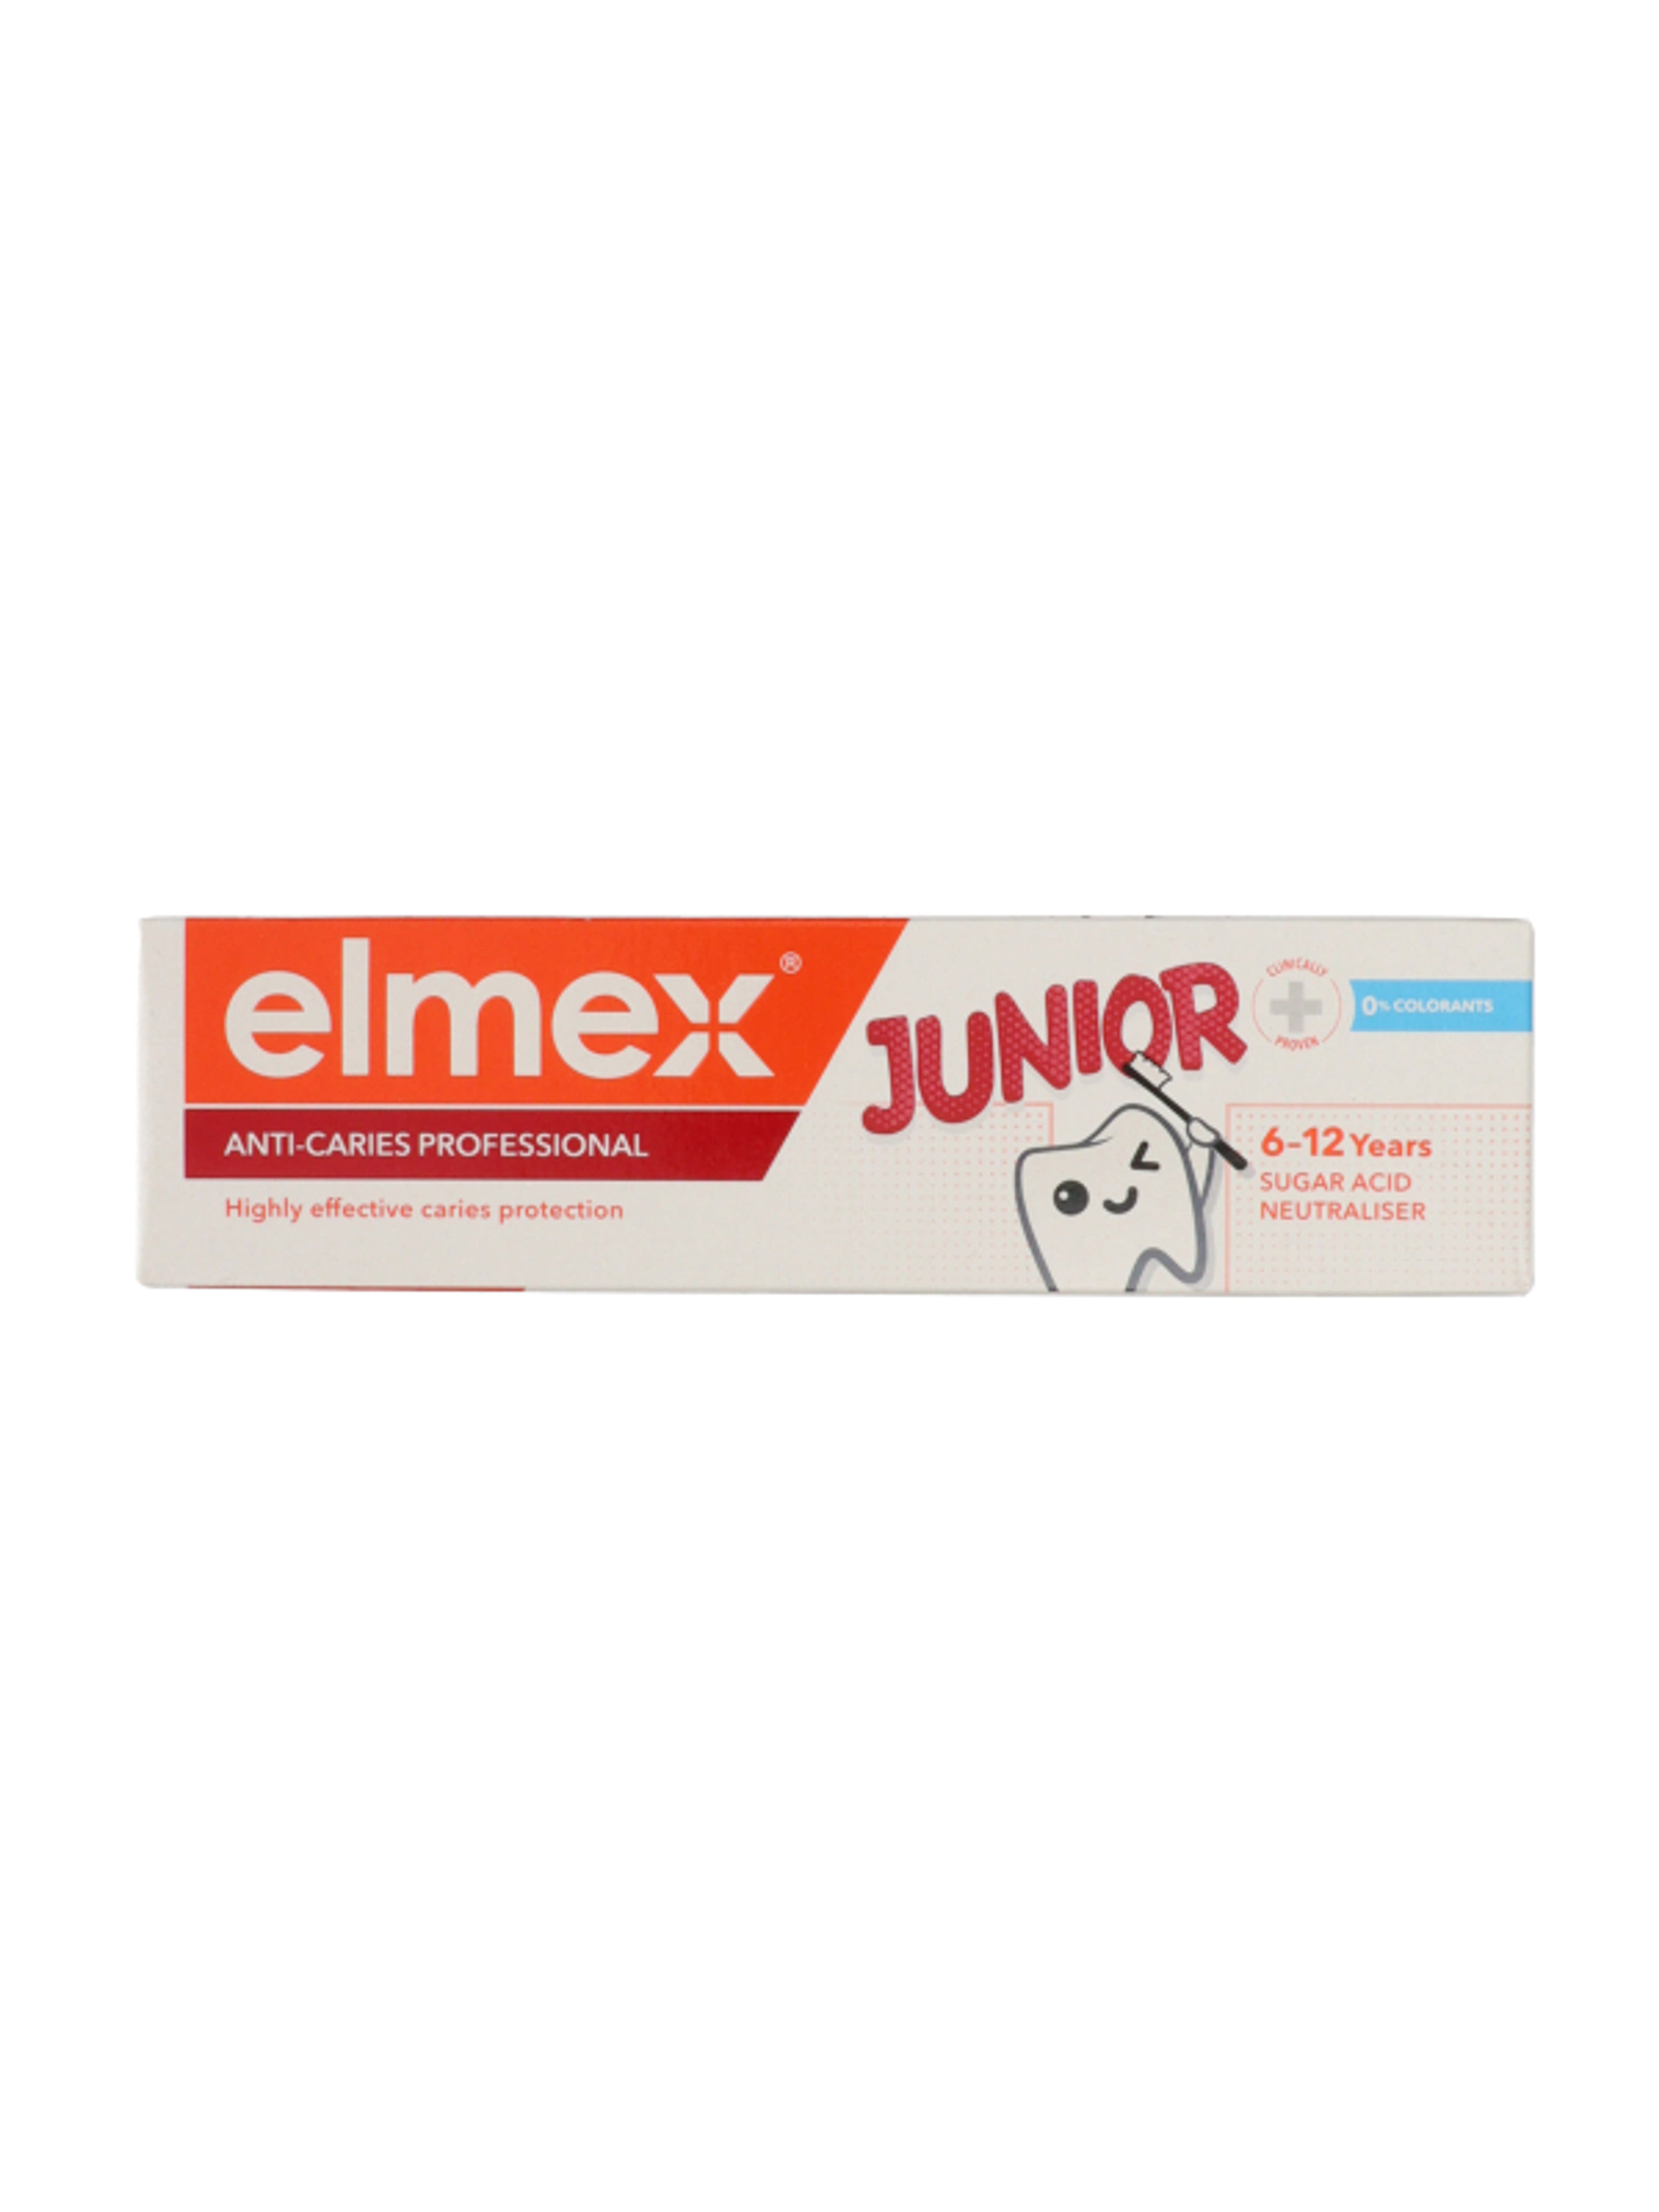 Elmex Junior Anti-Caries Professional fogkrém - 75 ml-6